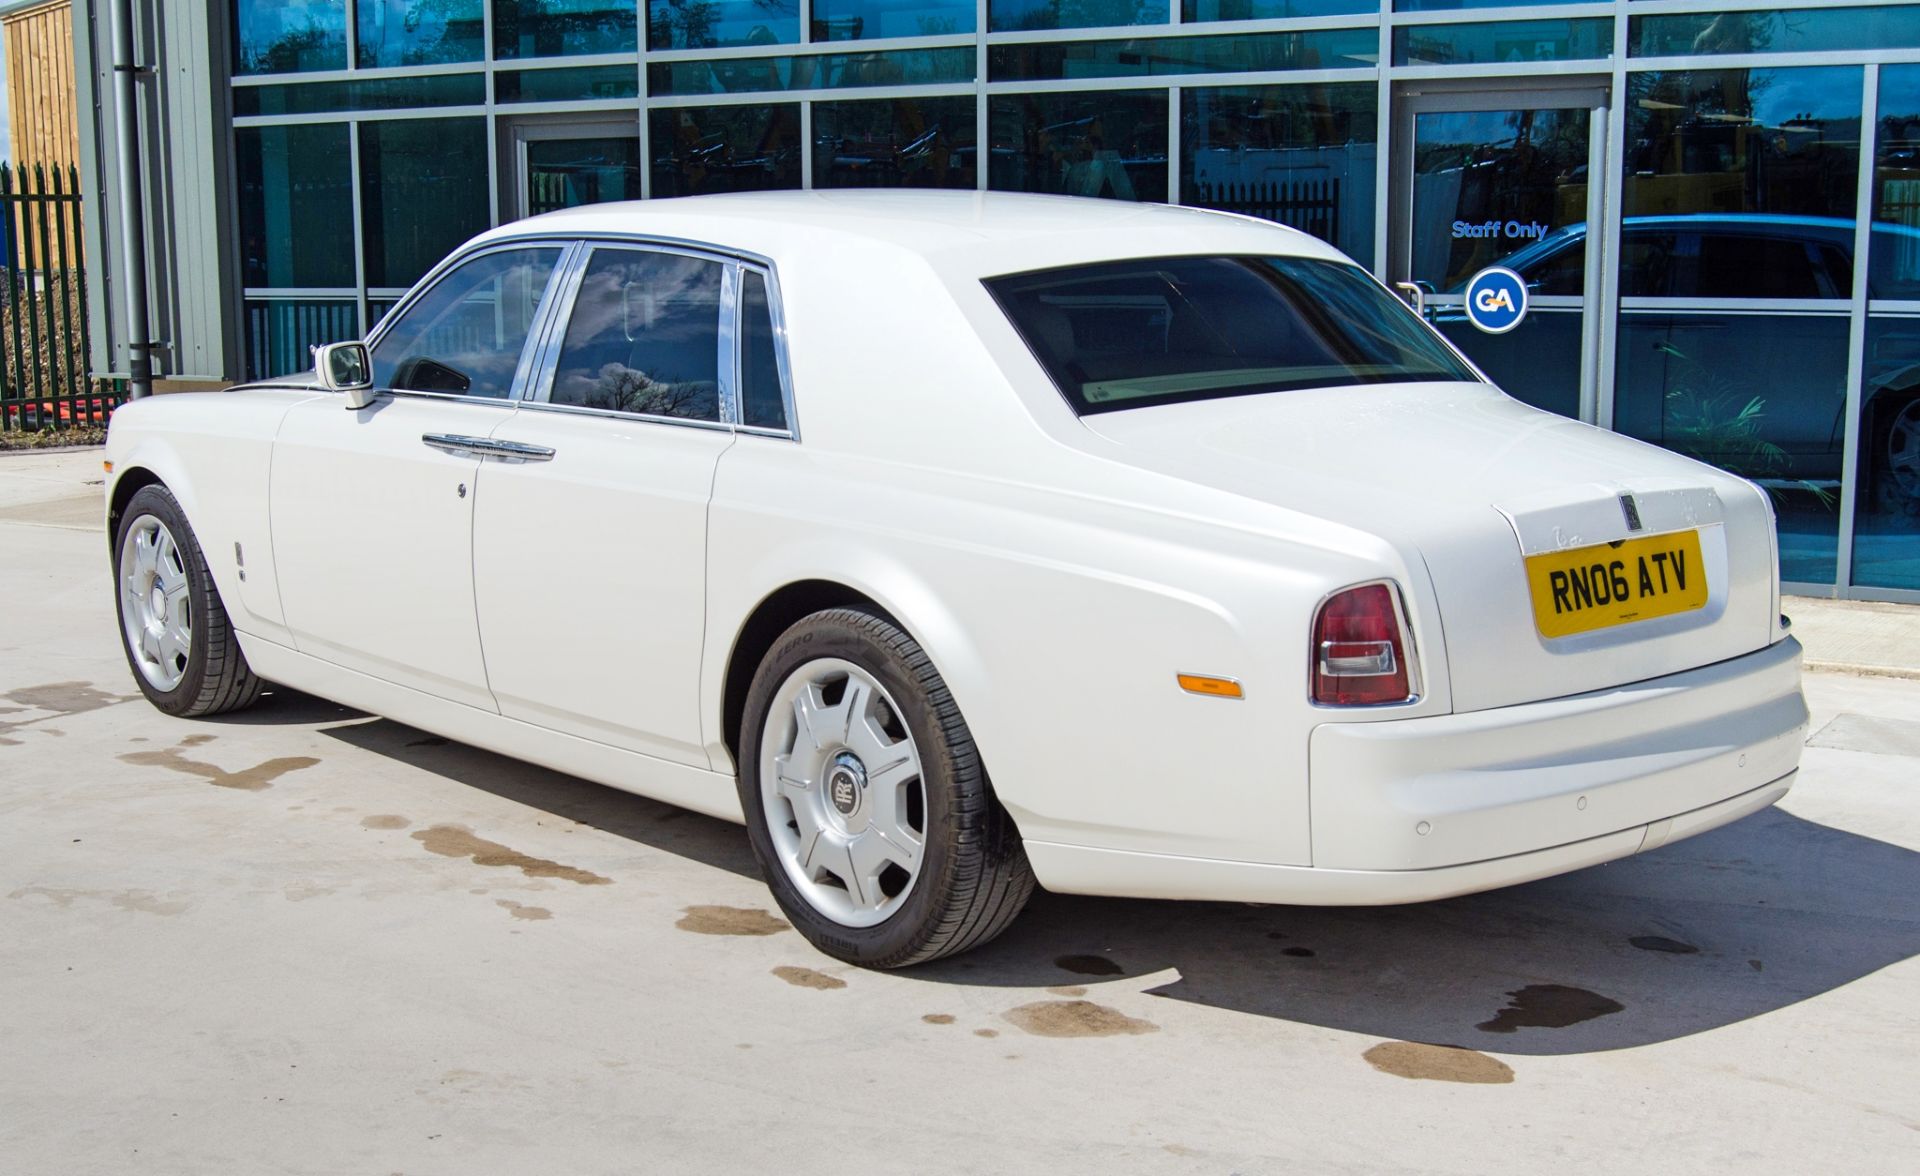 Rolls Royce Phantom 6749cc V12 Auto 4 door saloon car Registration Number: RN06 ATV Date of - Image 8 of 52